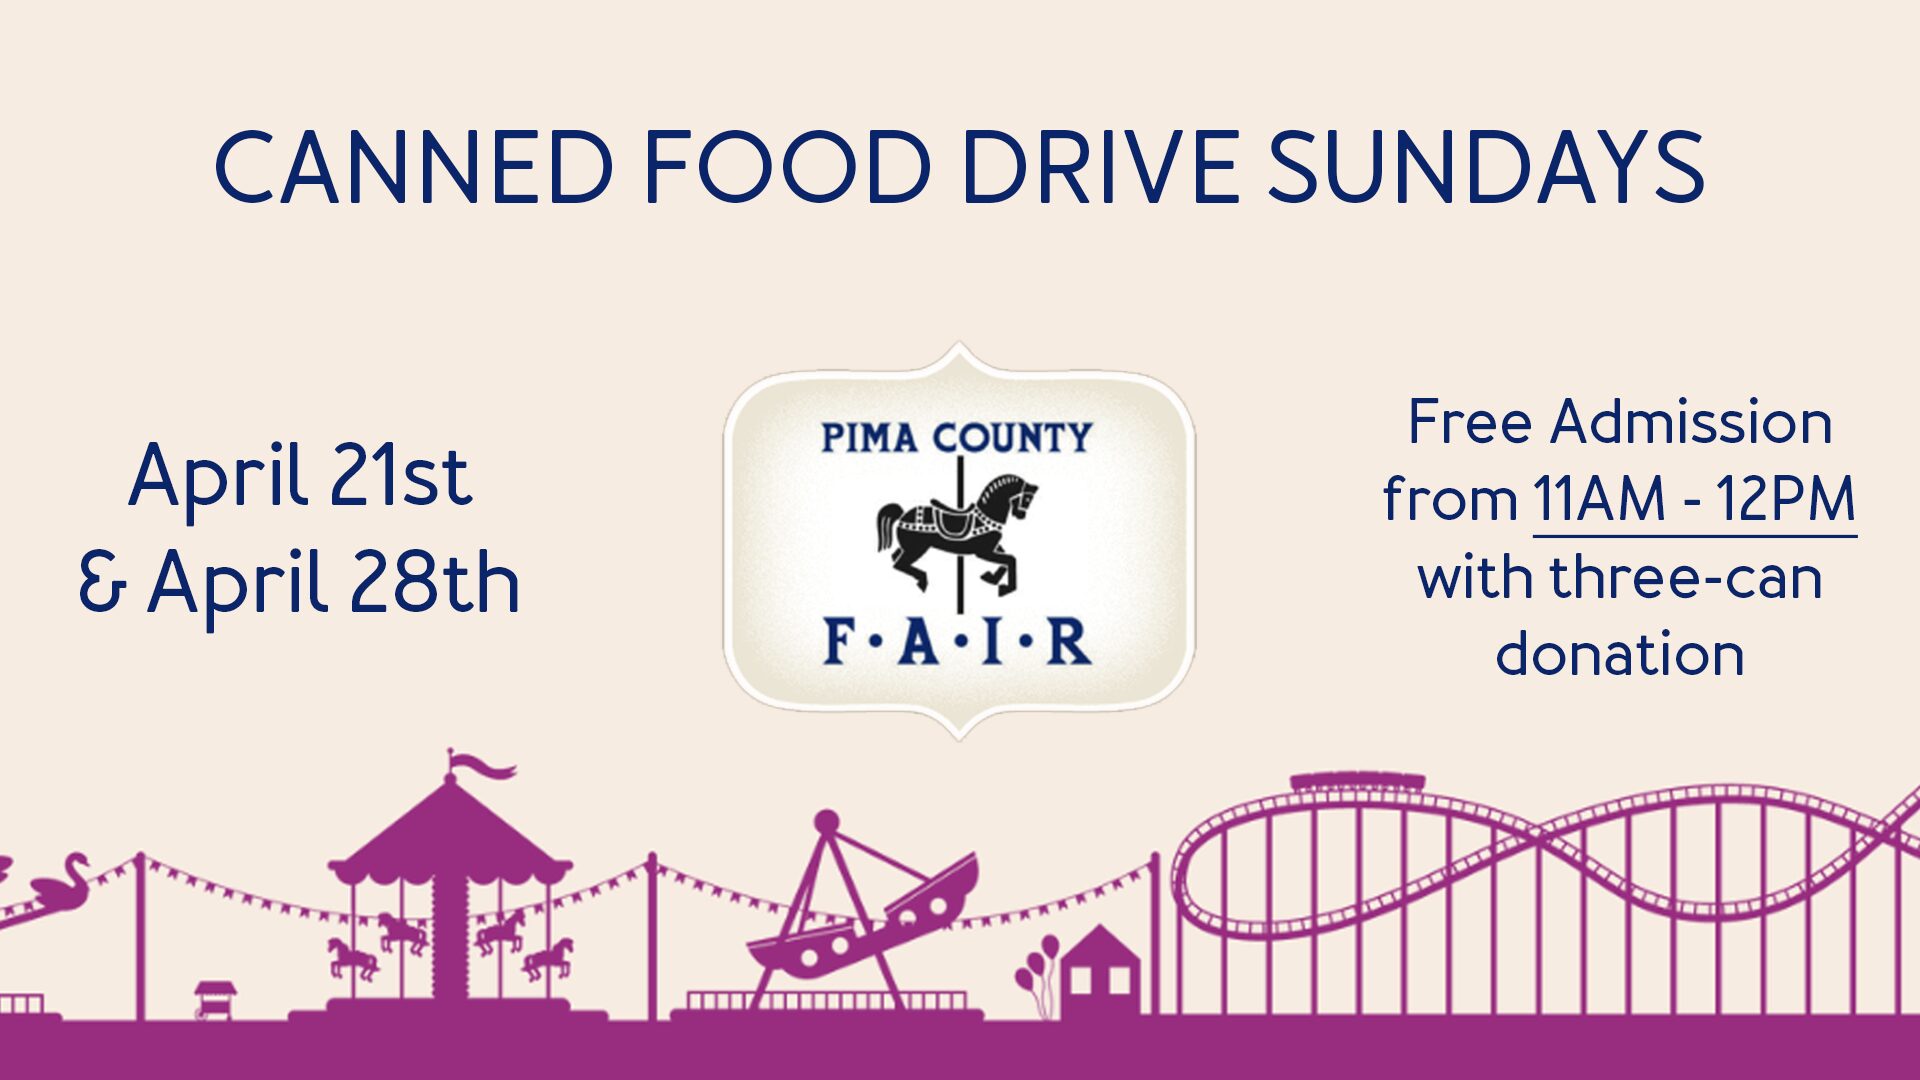 Canned Food Drive Sundays at the Pima County Fair,